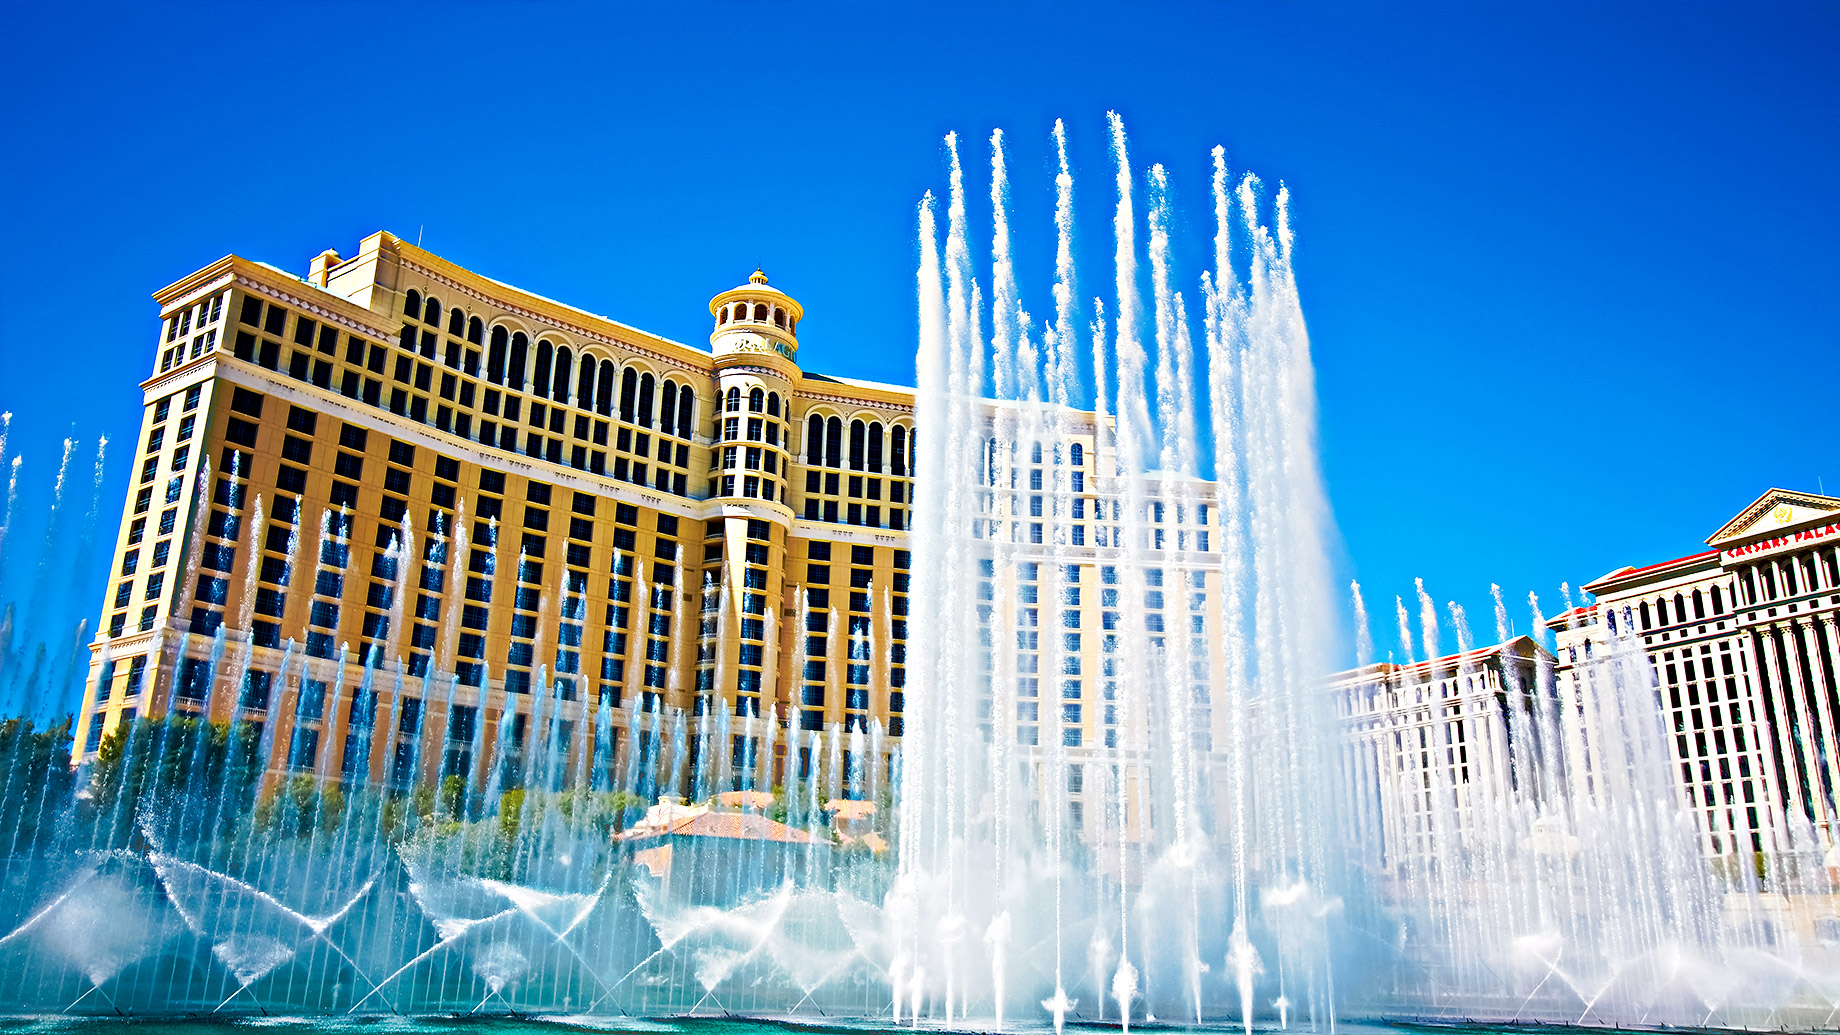 Bellagio Hotel & Casino - Las Vegas, Nevada, USA